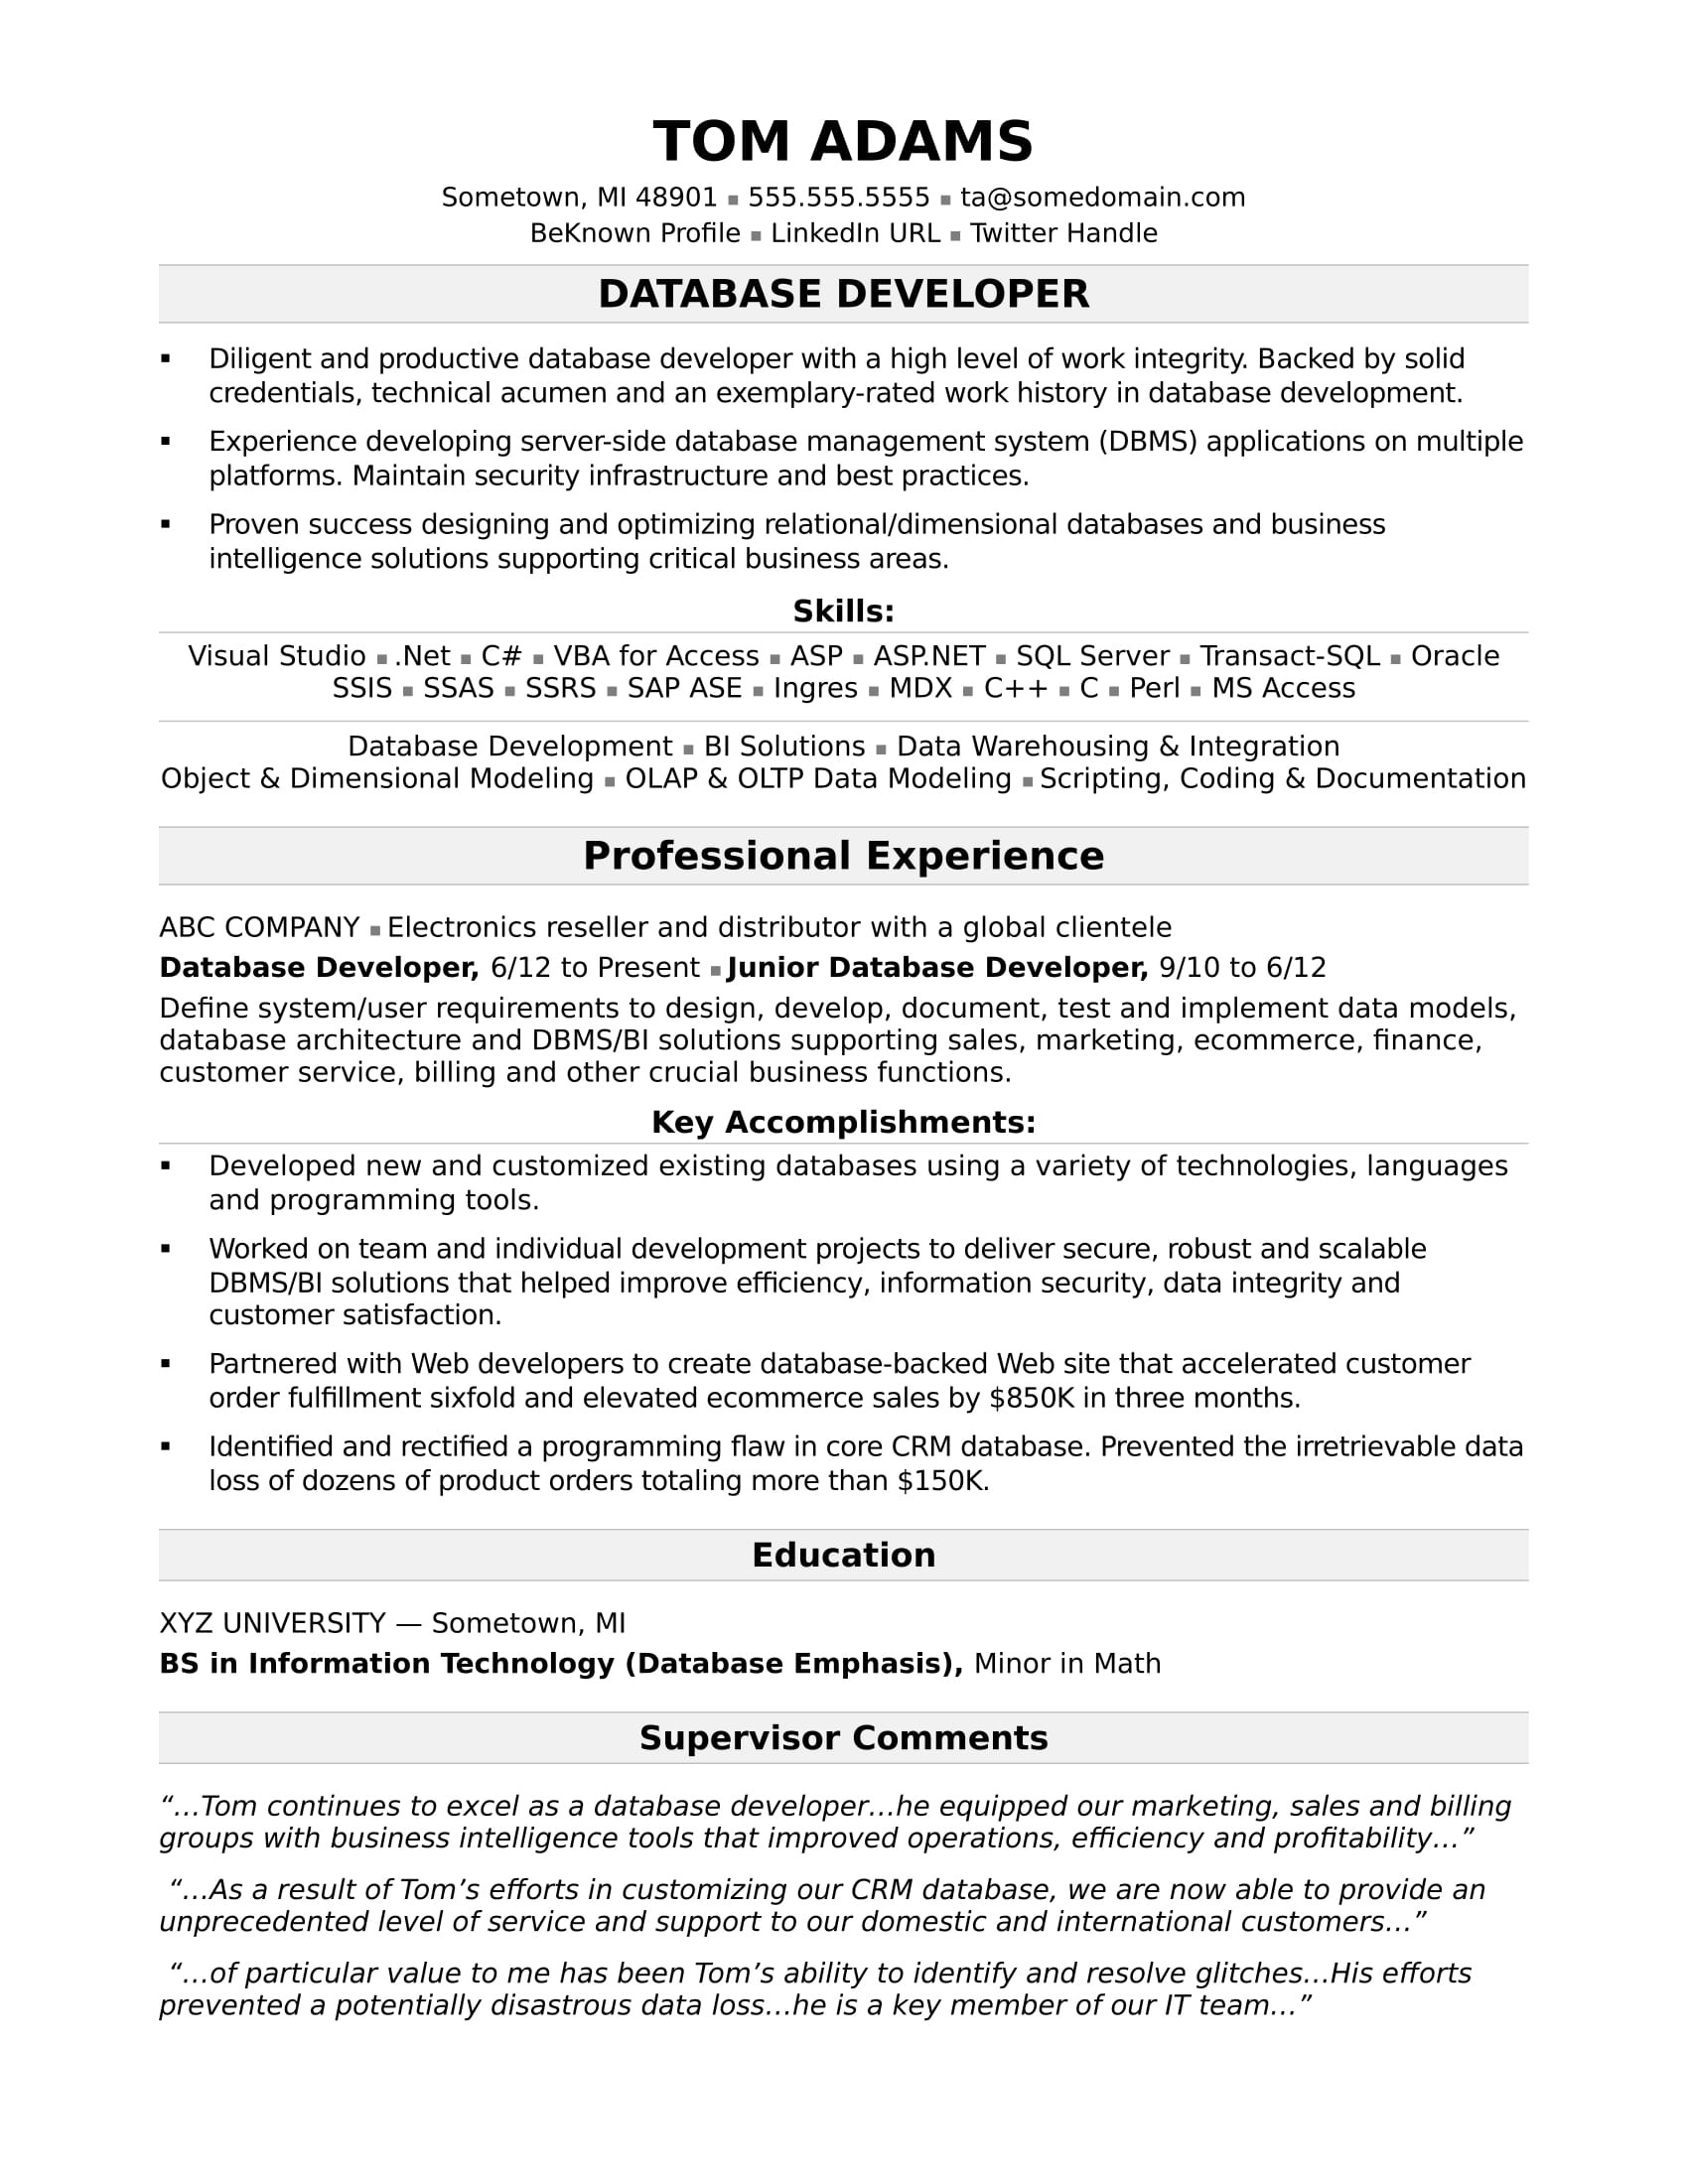 Software Engineer Resume Sample Monster Entry Level Sample Resume for A Midlevel It Developer Monster.com